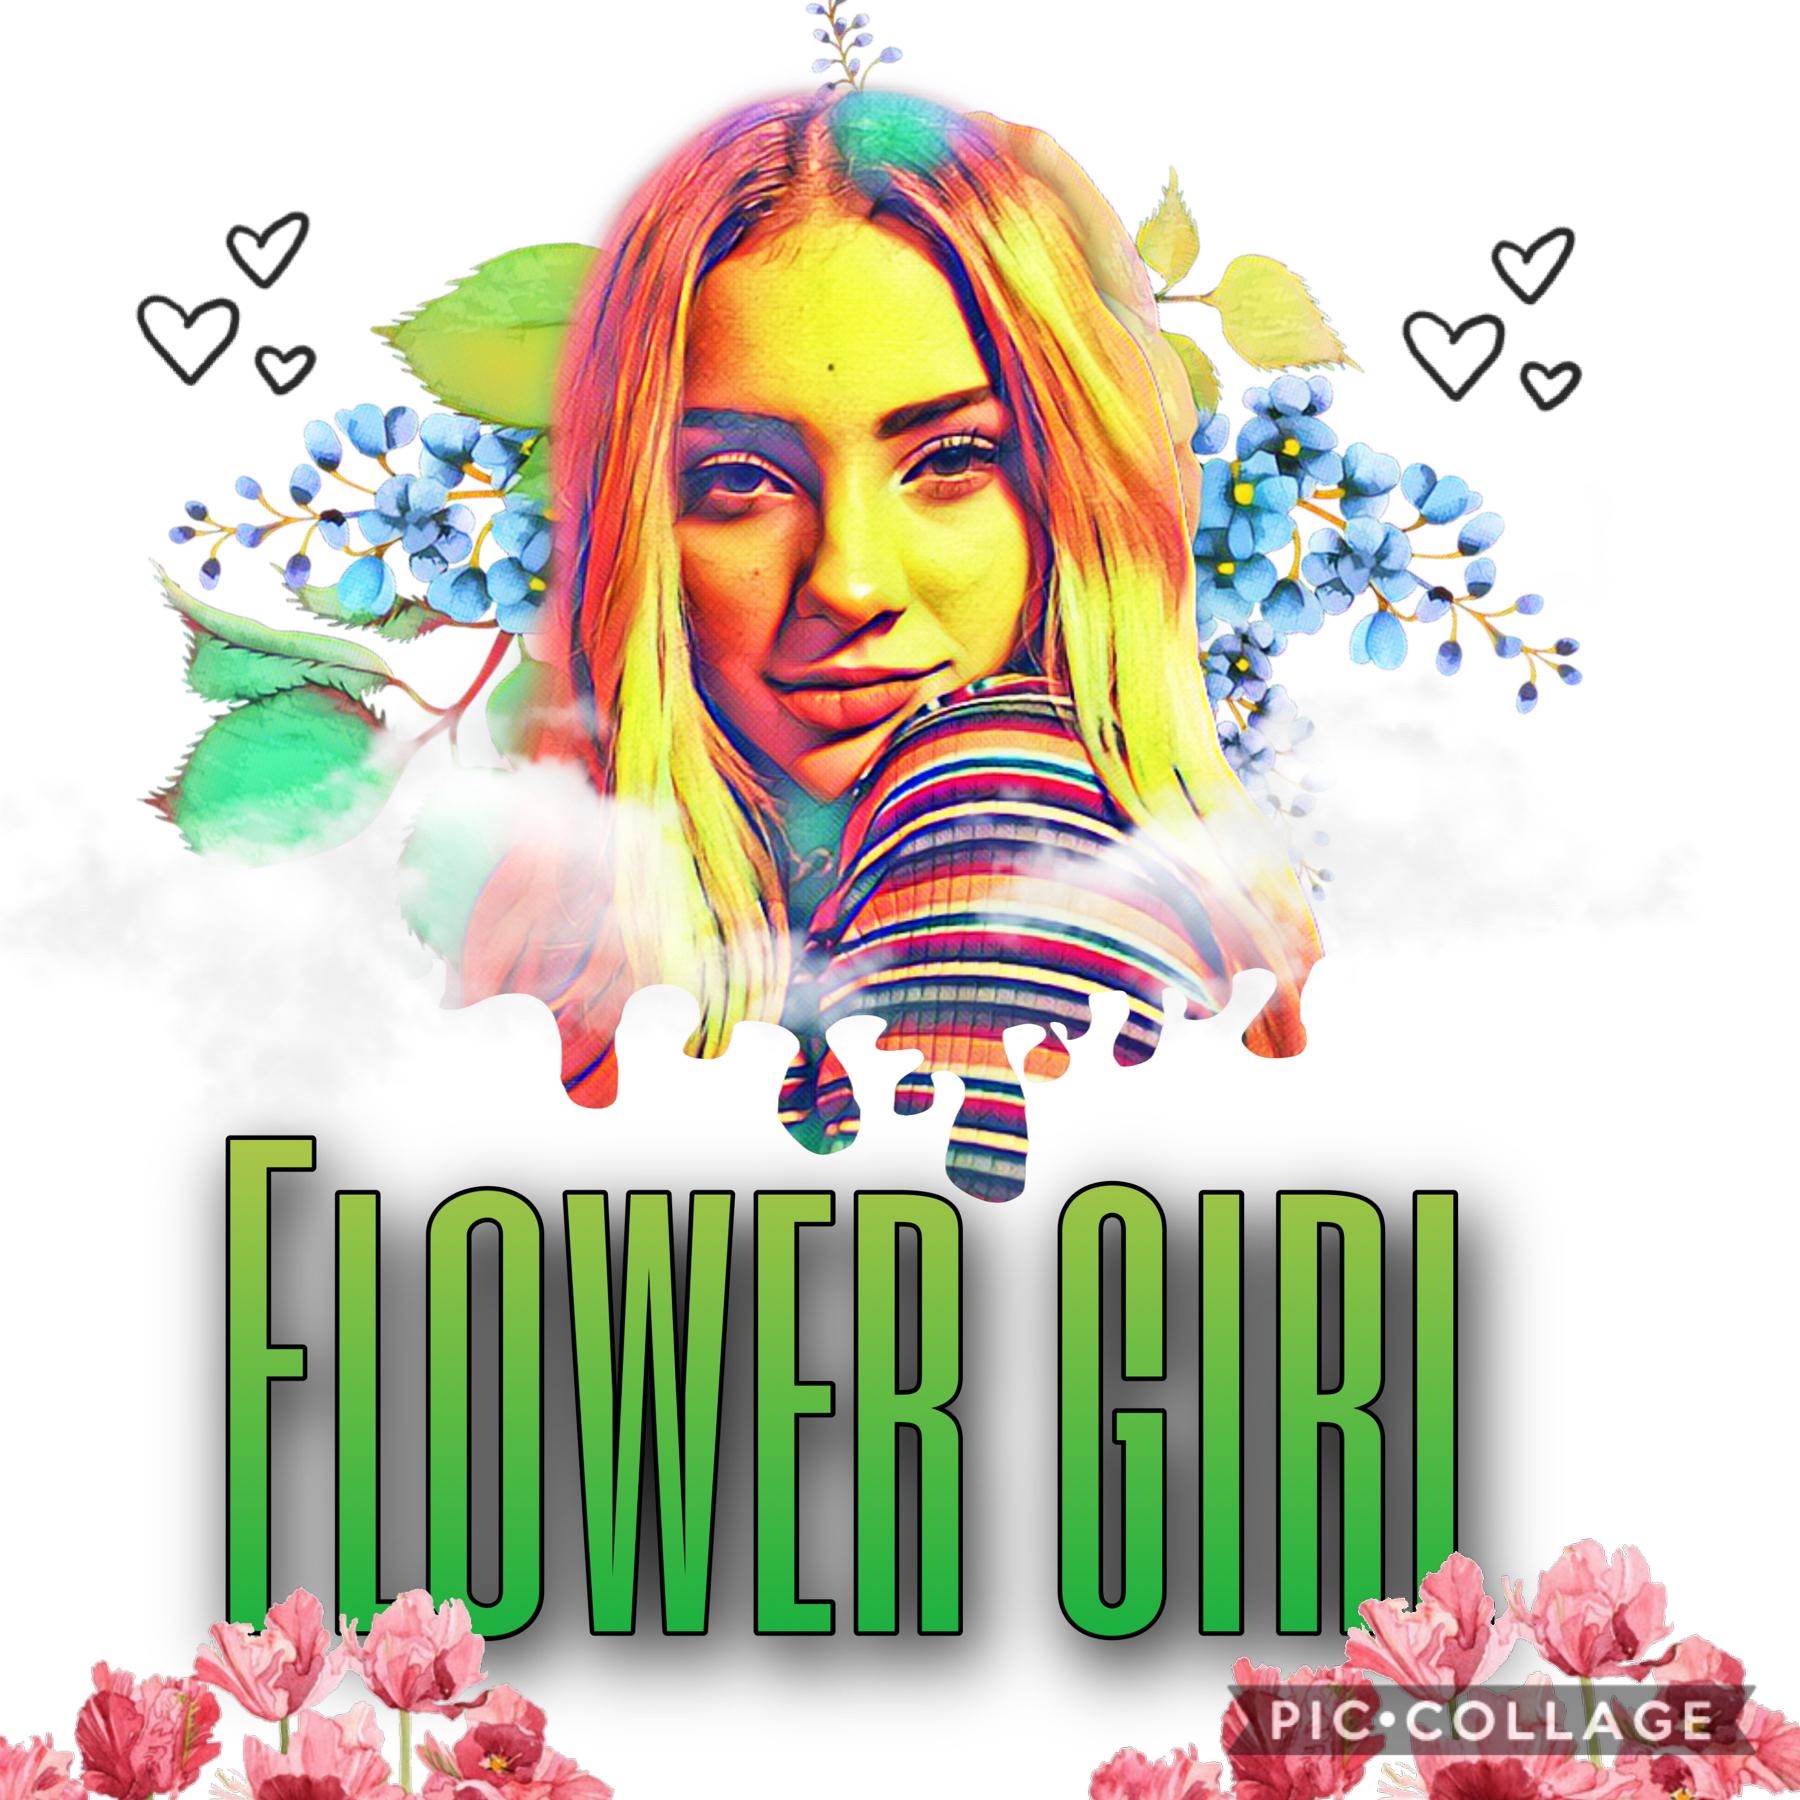 Flower girl 😘plz enter my contest 